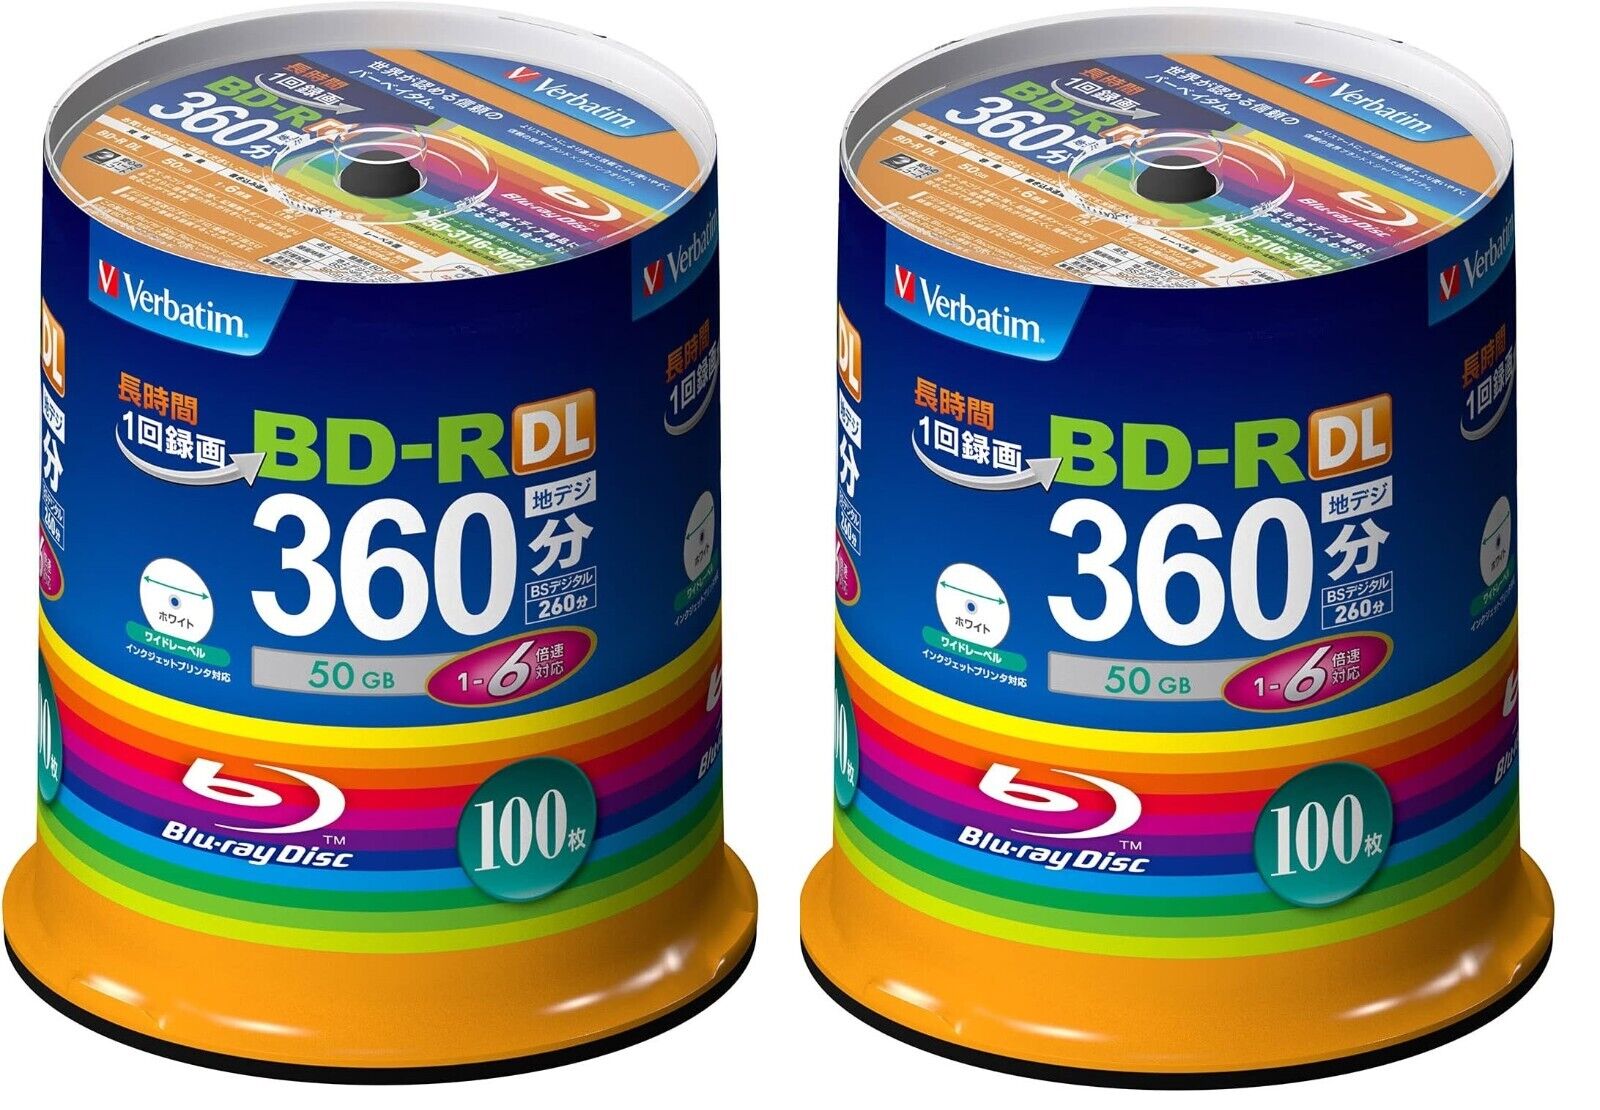 Verbatim VBR260RP100SV1 Blank Blu-ray BD-R DL 50GB 1-6x 100Disc x2 (200Disc) NEW